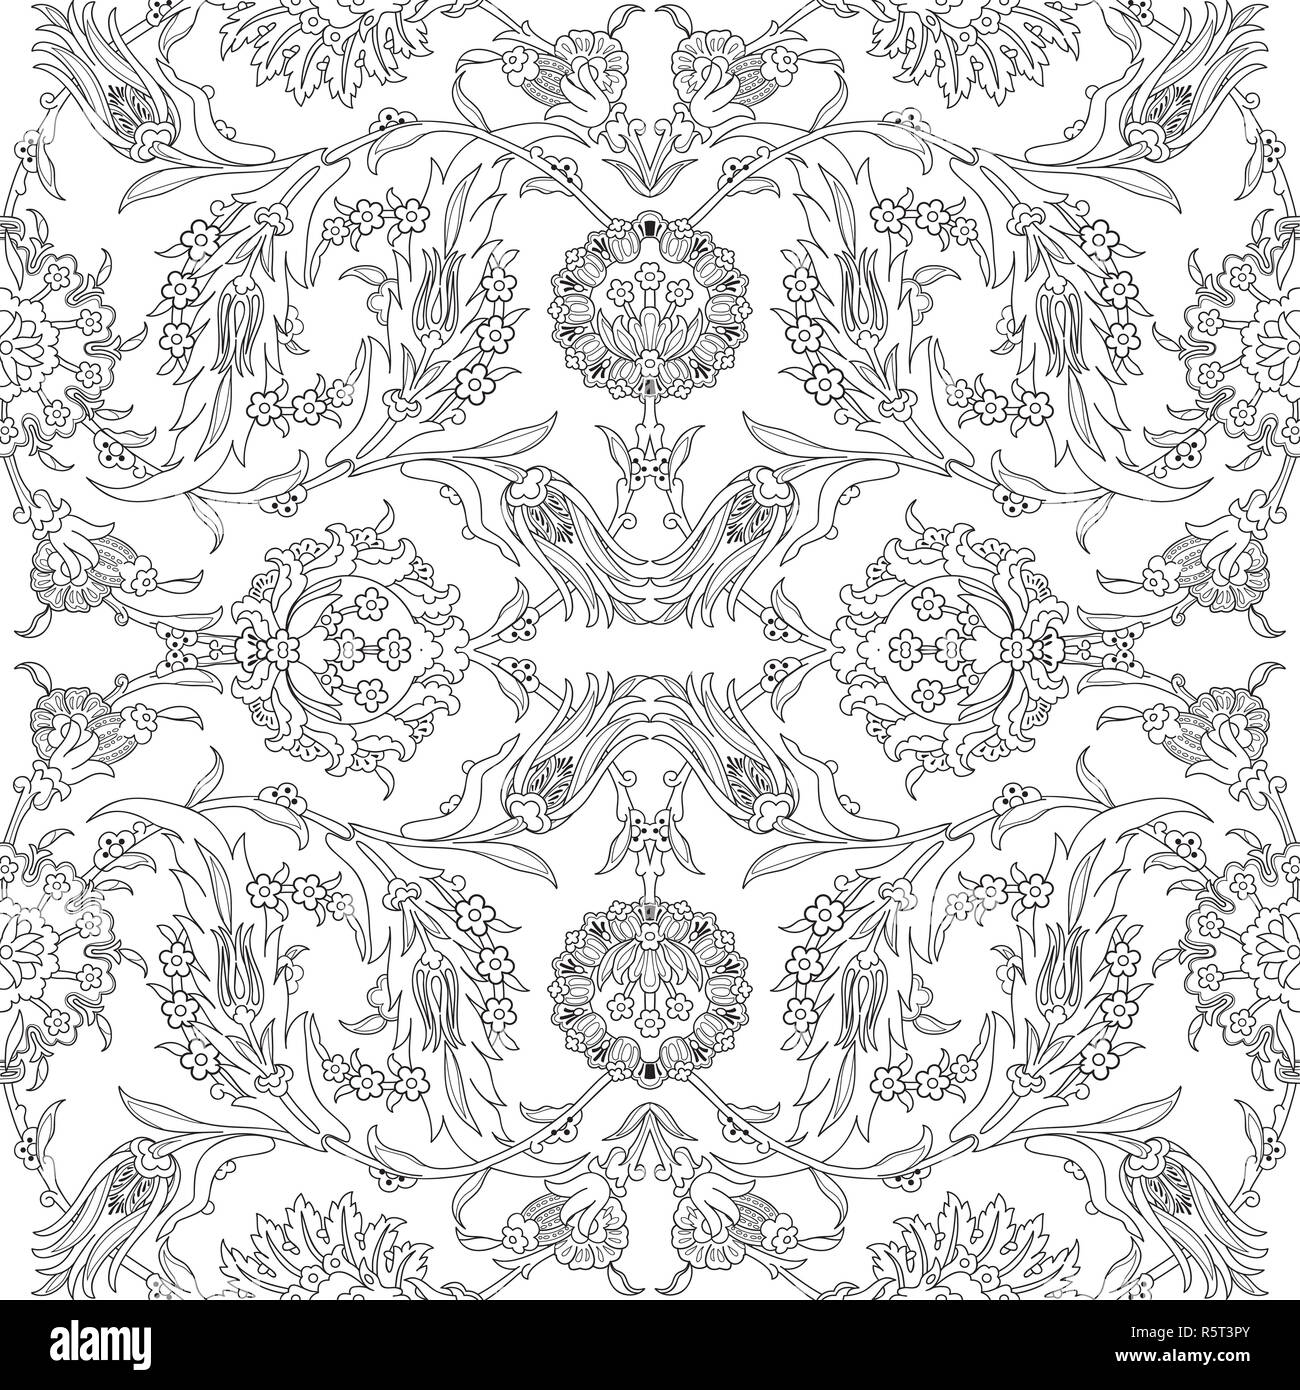 Arabesque vintage decor floral ornate pattern for design templat Stock Photo